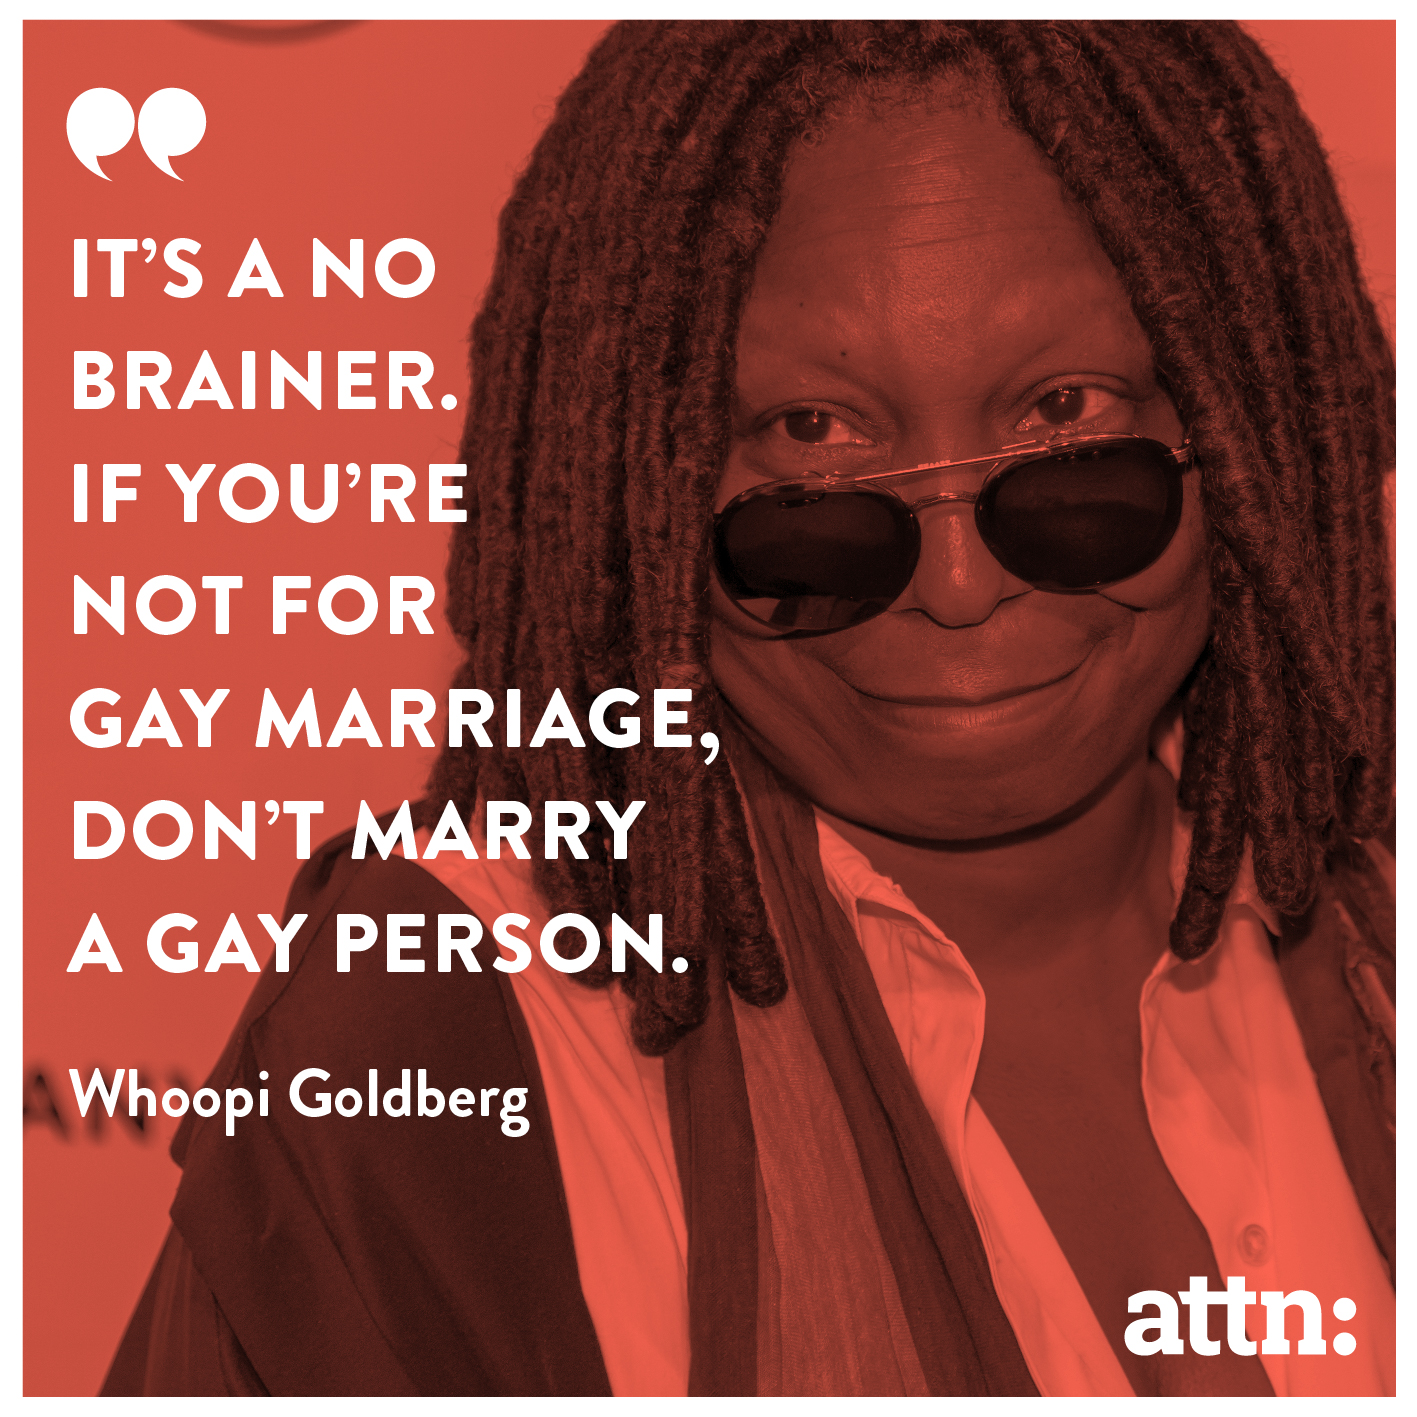 whoopi goldberg gay marriage